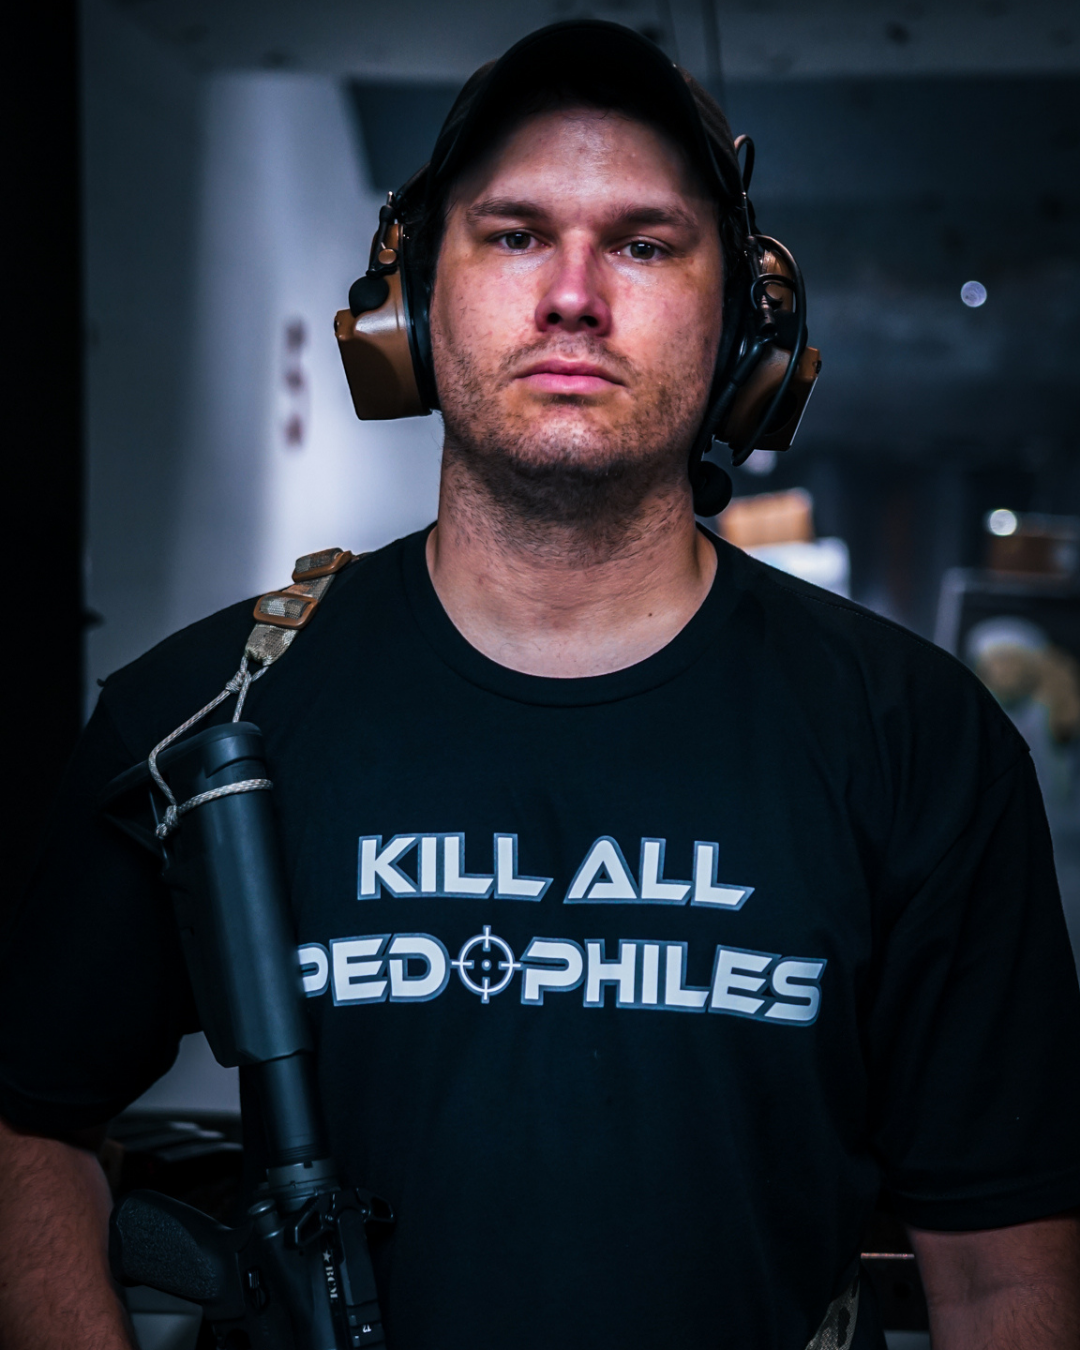 Kill All Pedophiles T-Shirt